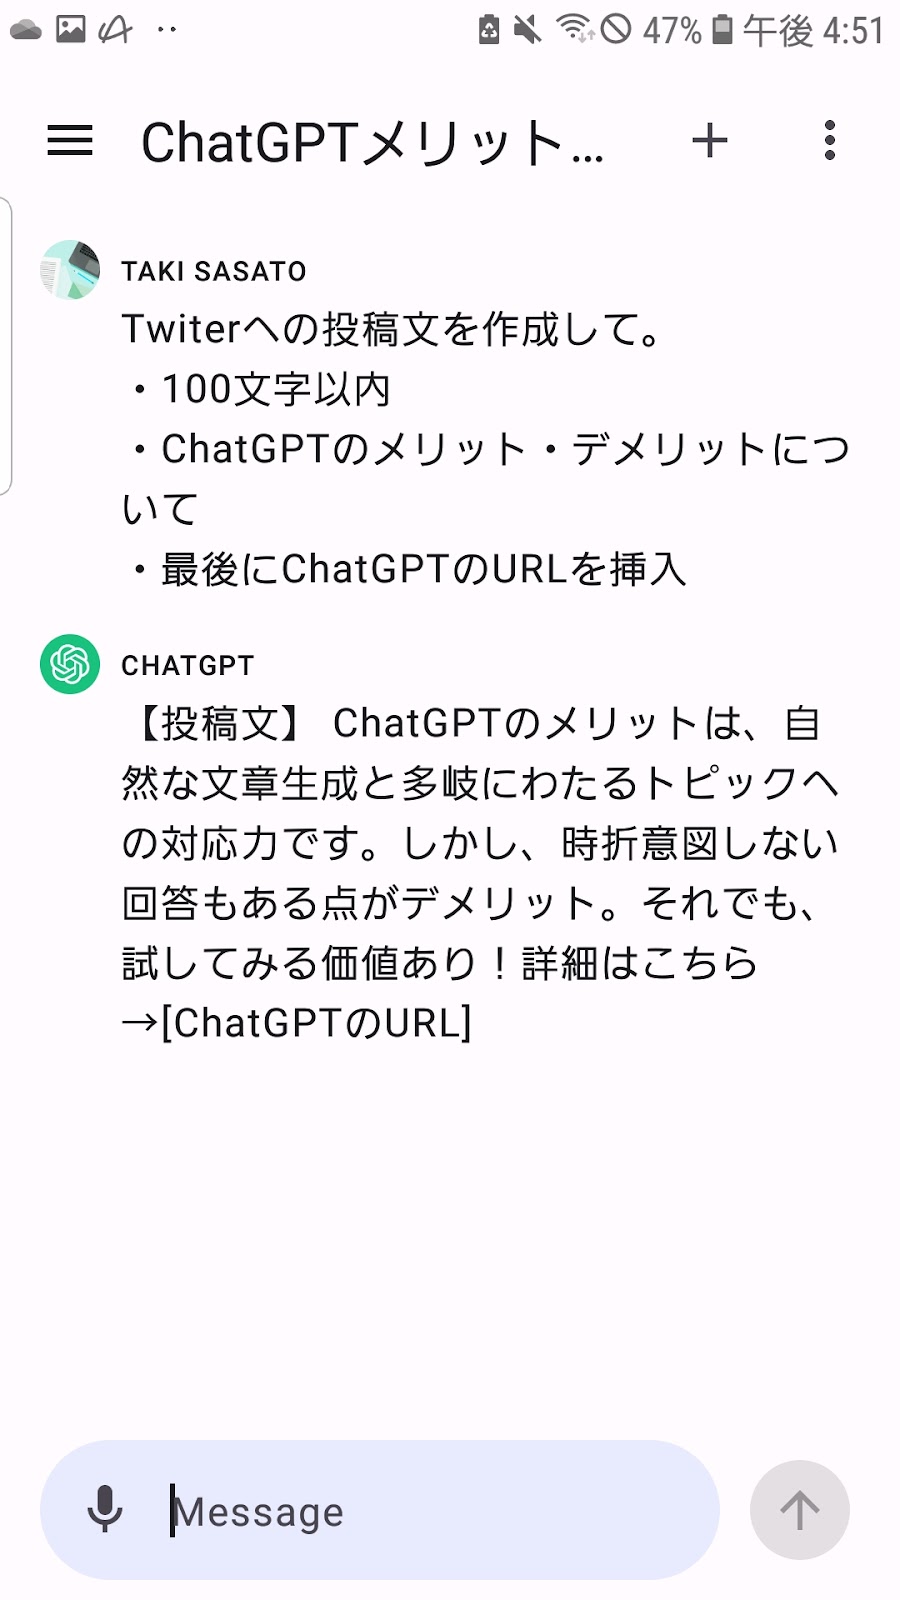 ChatGPT